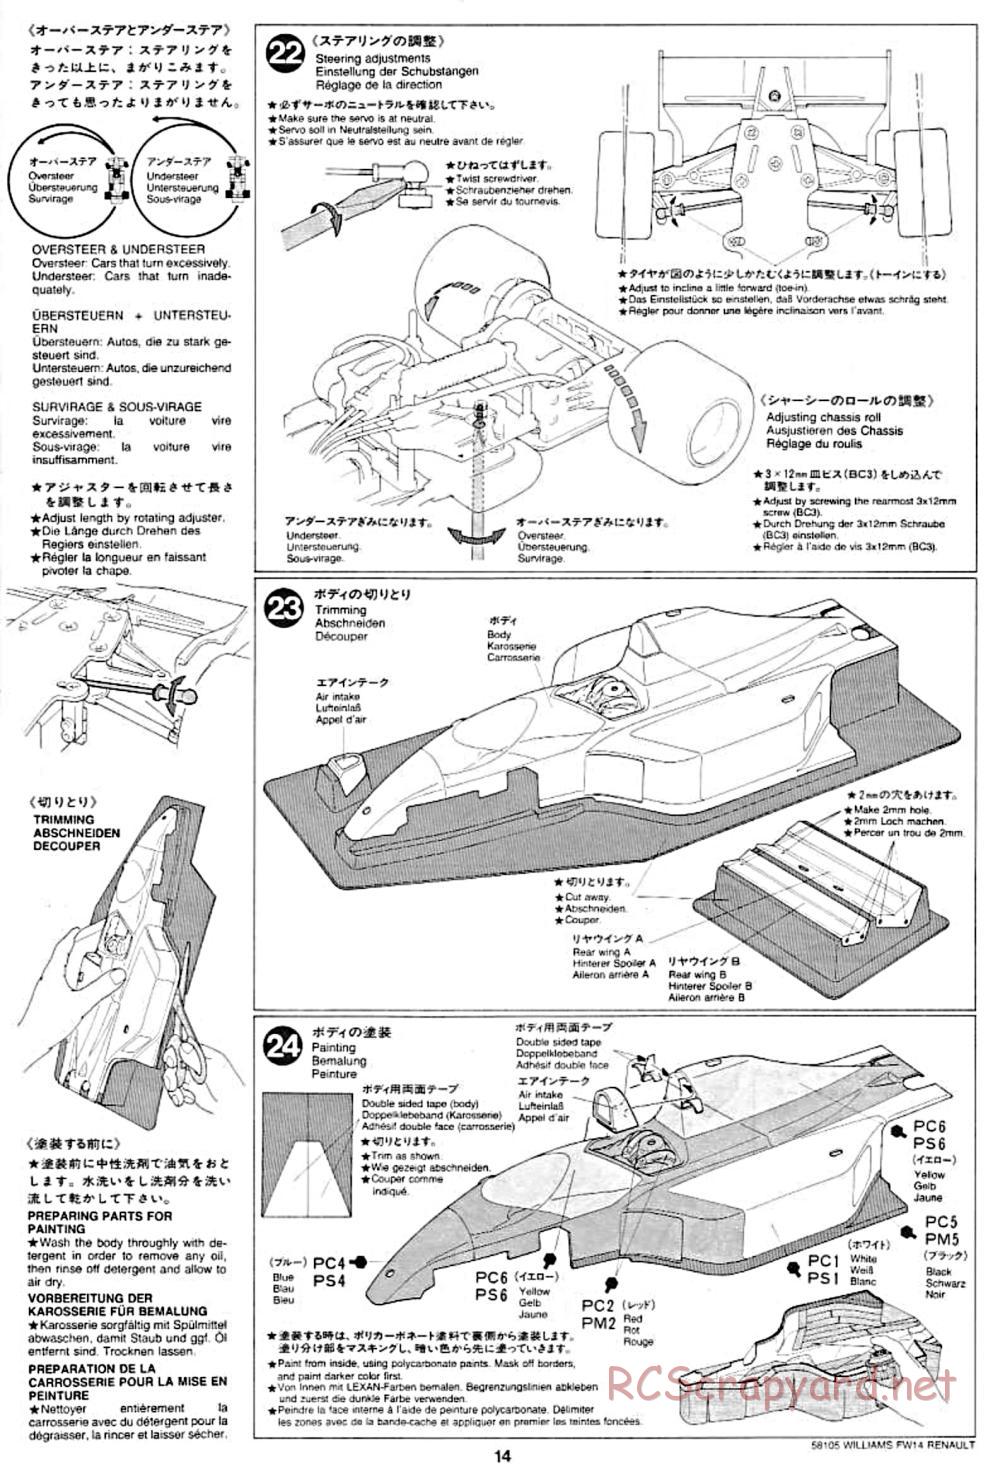 Tamiya - Williams FW14 Renault - F102 Chassis - Manual - Page 14